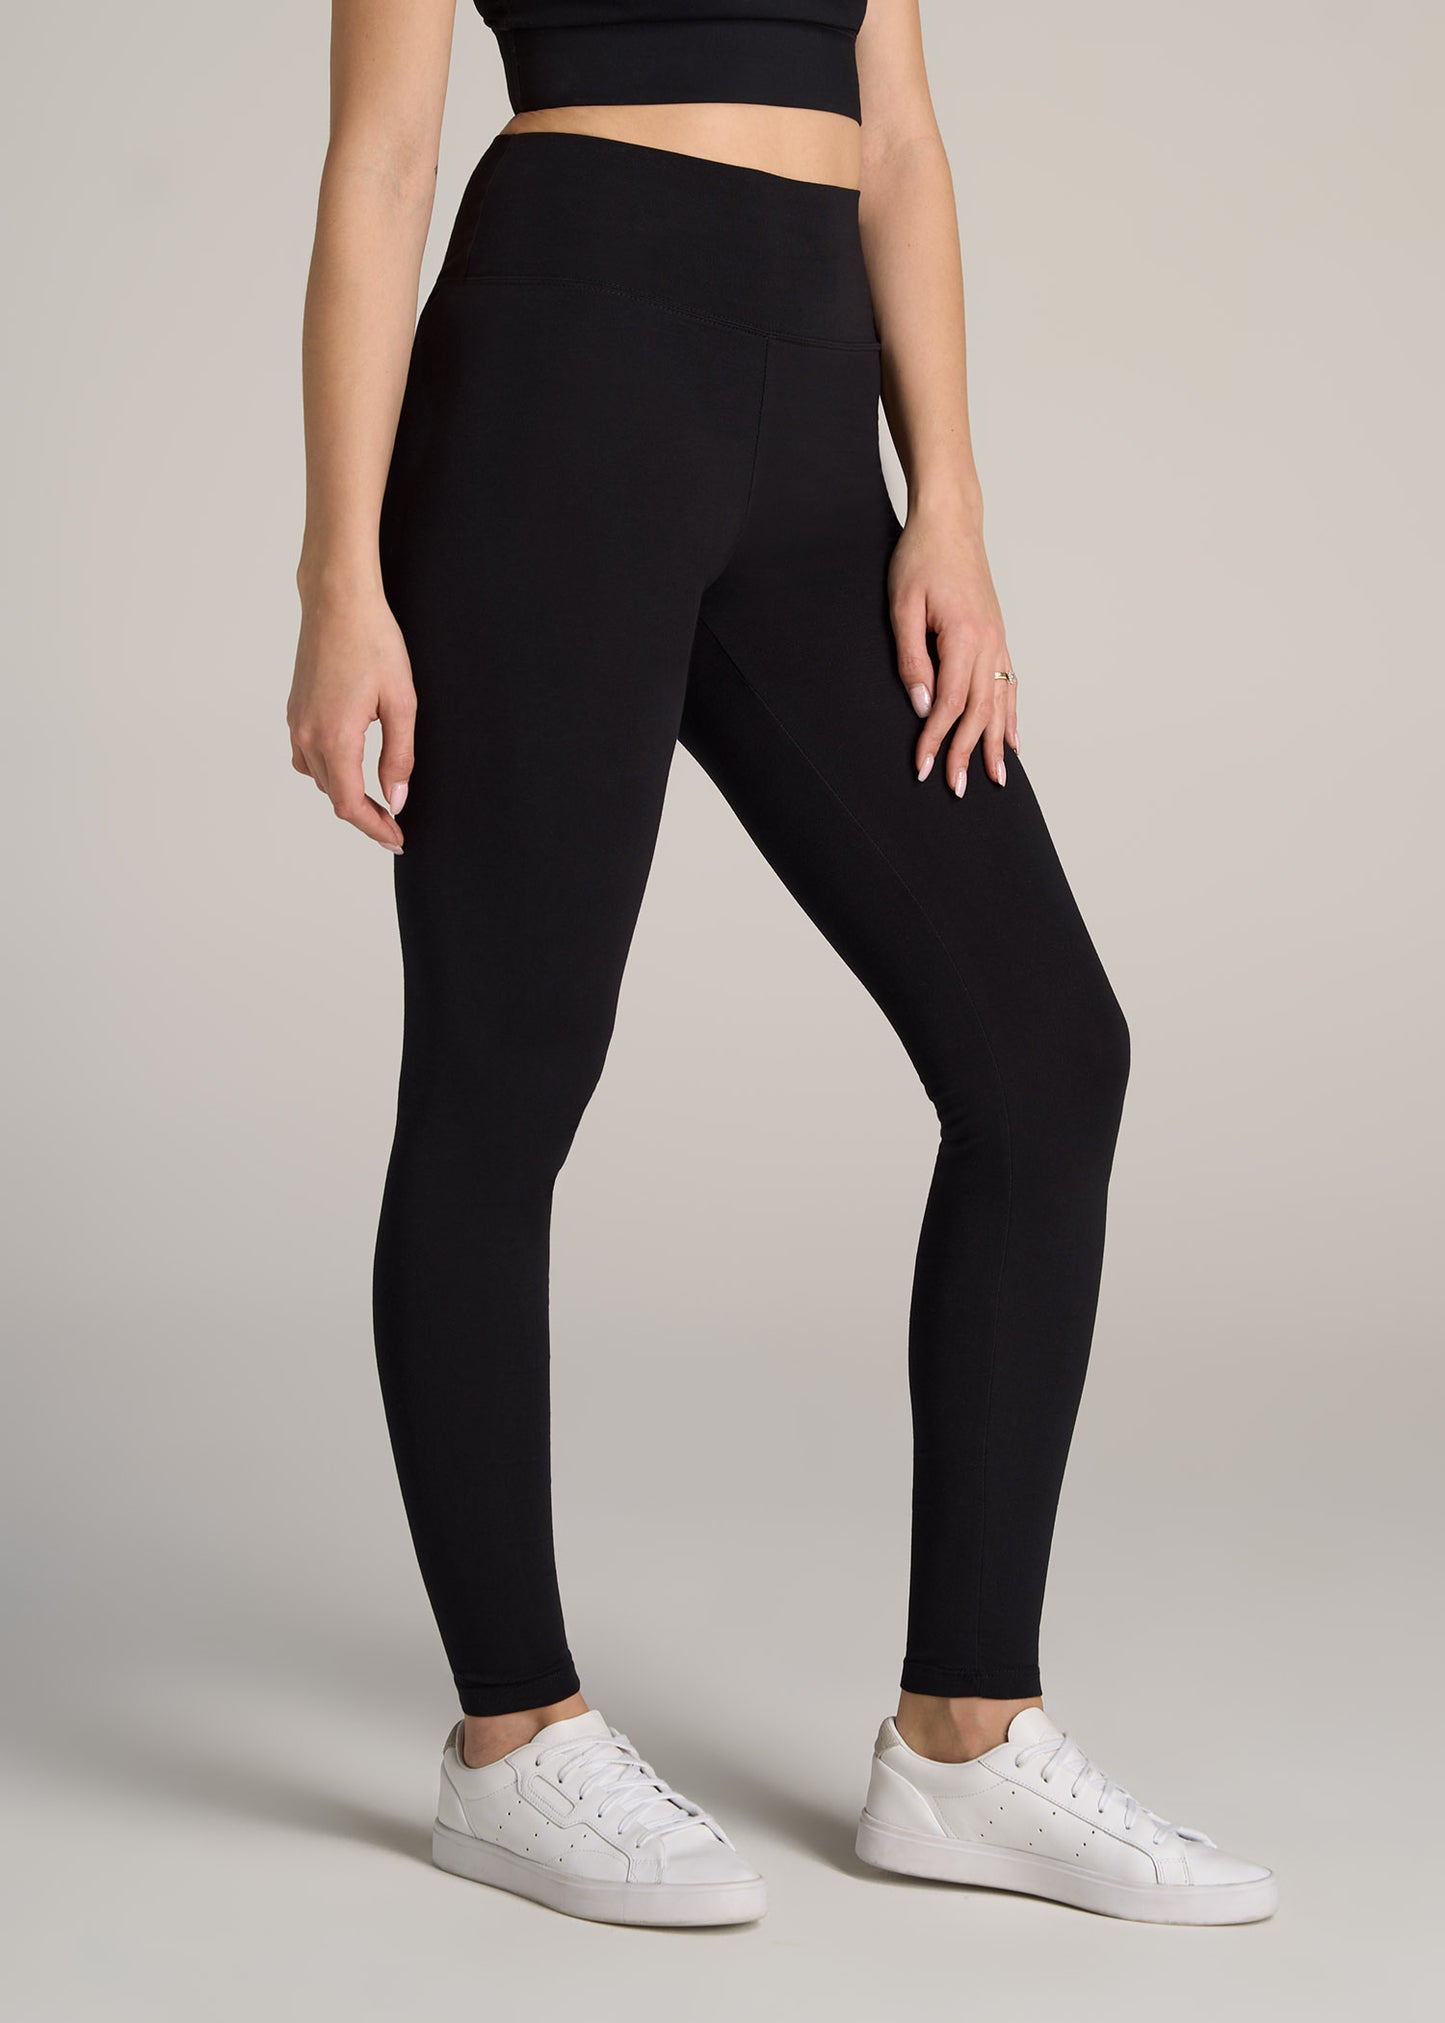 Alexvyan Black Skinny & Slim Fit Gym Wear Yoga Pants Ankle Length Leggings  Workout Active wear | Stretchable Workout Tights | High Waist Sports  Fitness for Girls & Women- Nylon Fiber &